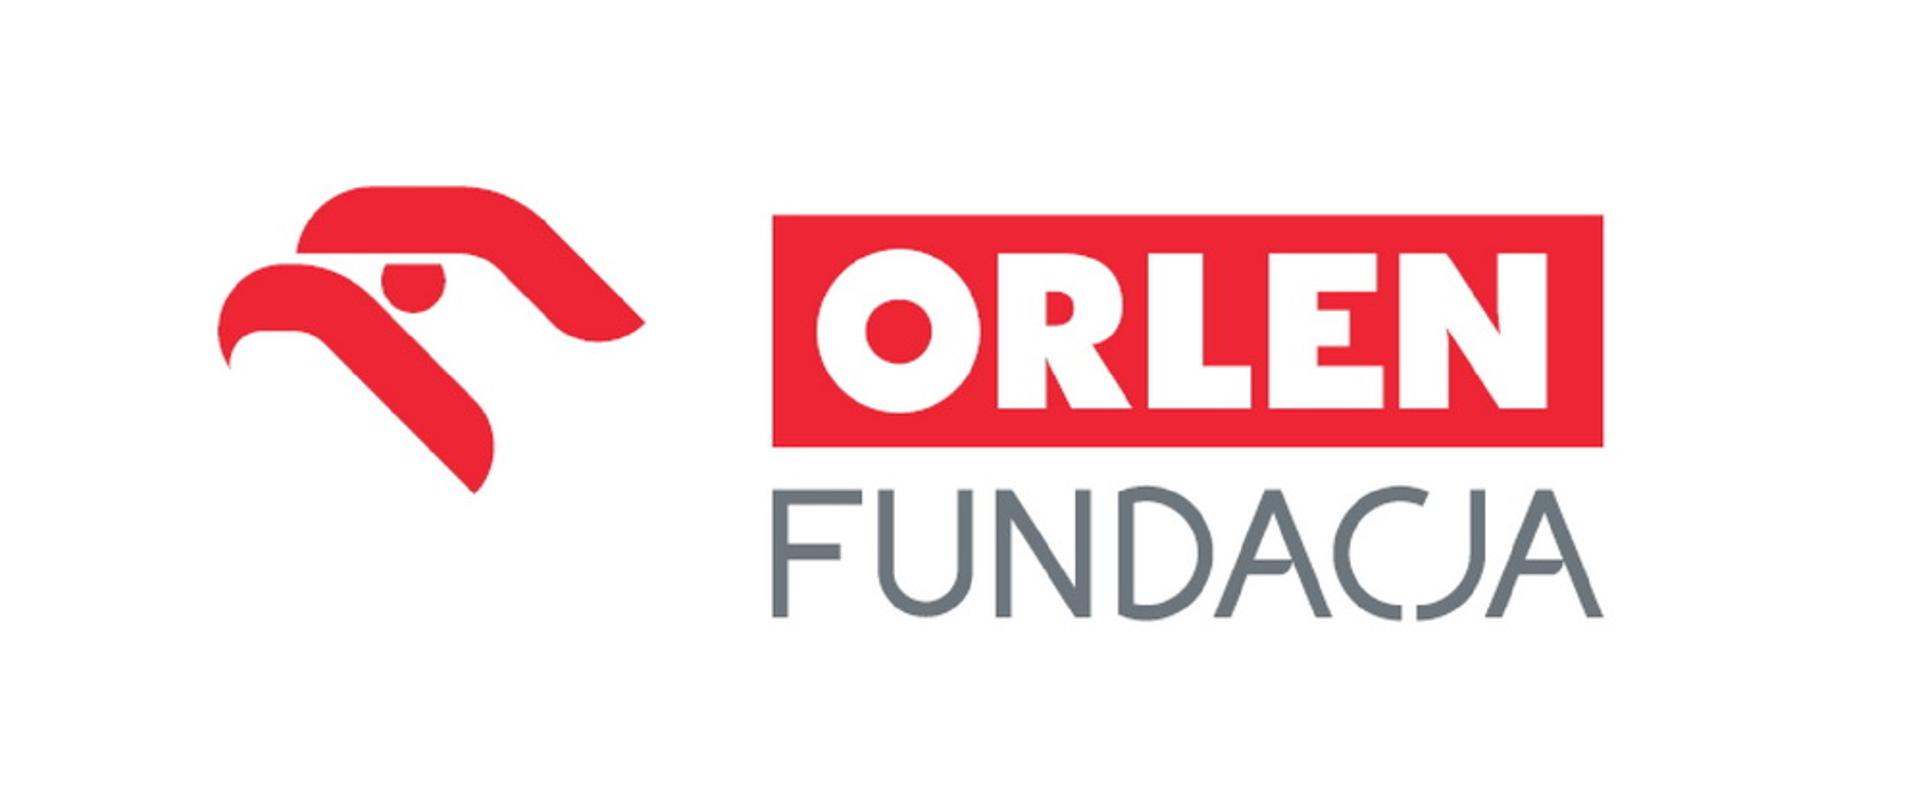 Logotyp Fundacji ORLEN